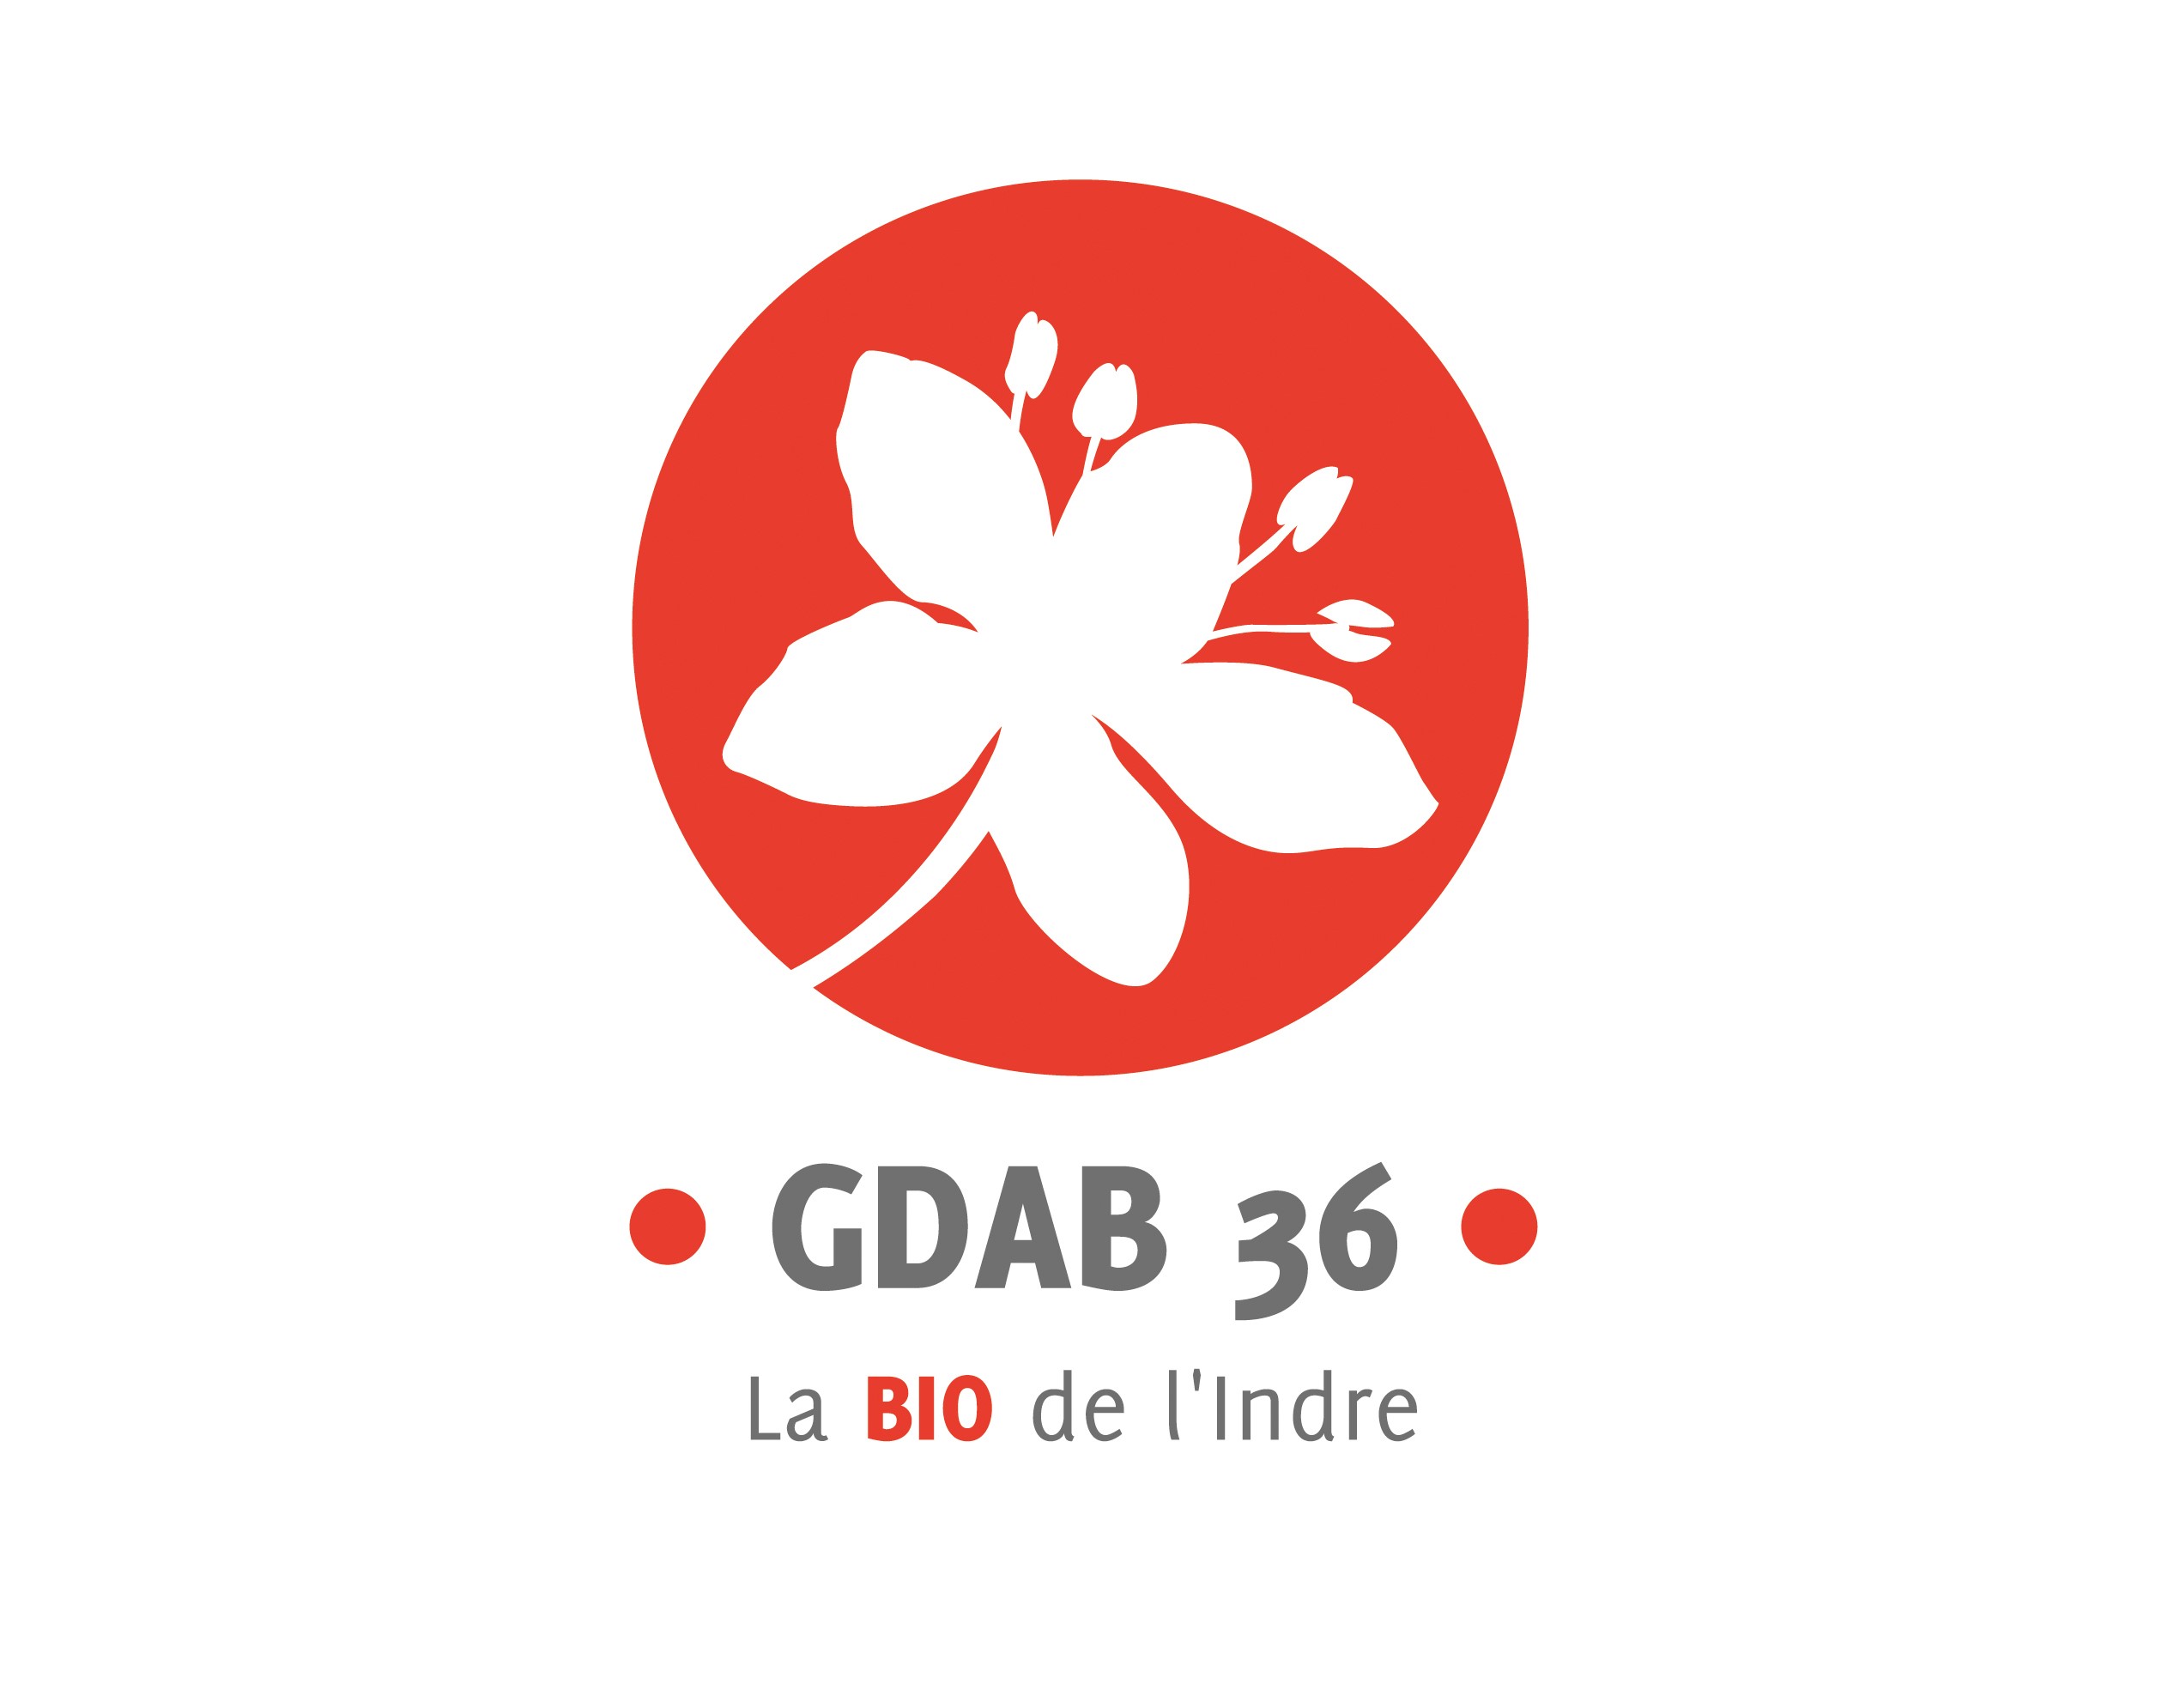 GDAB36